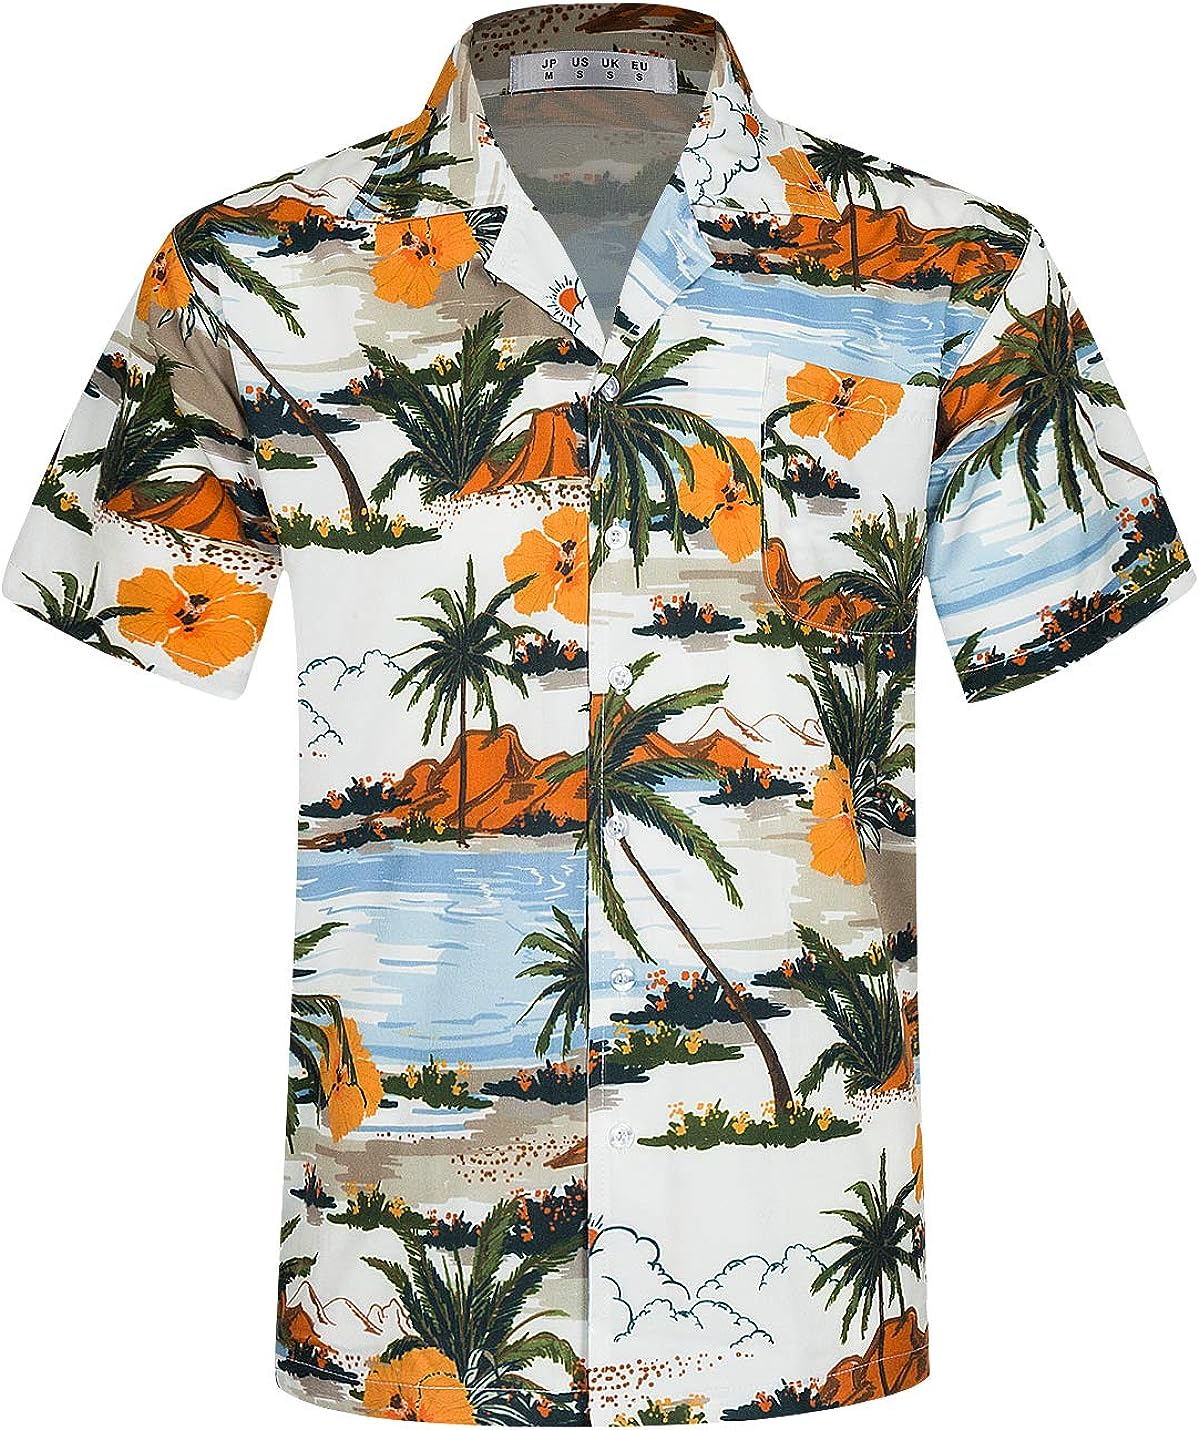 ELETOP Men's Hawaiian Shirt Quick Dry Tropical Aloha Shirts Short Sleeve Beach Holiday Casual Cuban Shirts